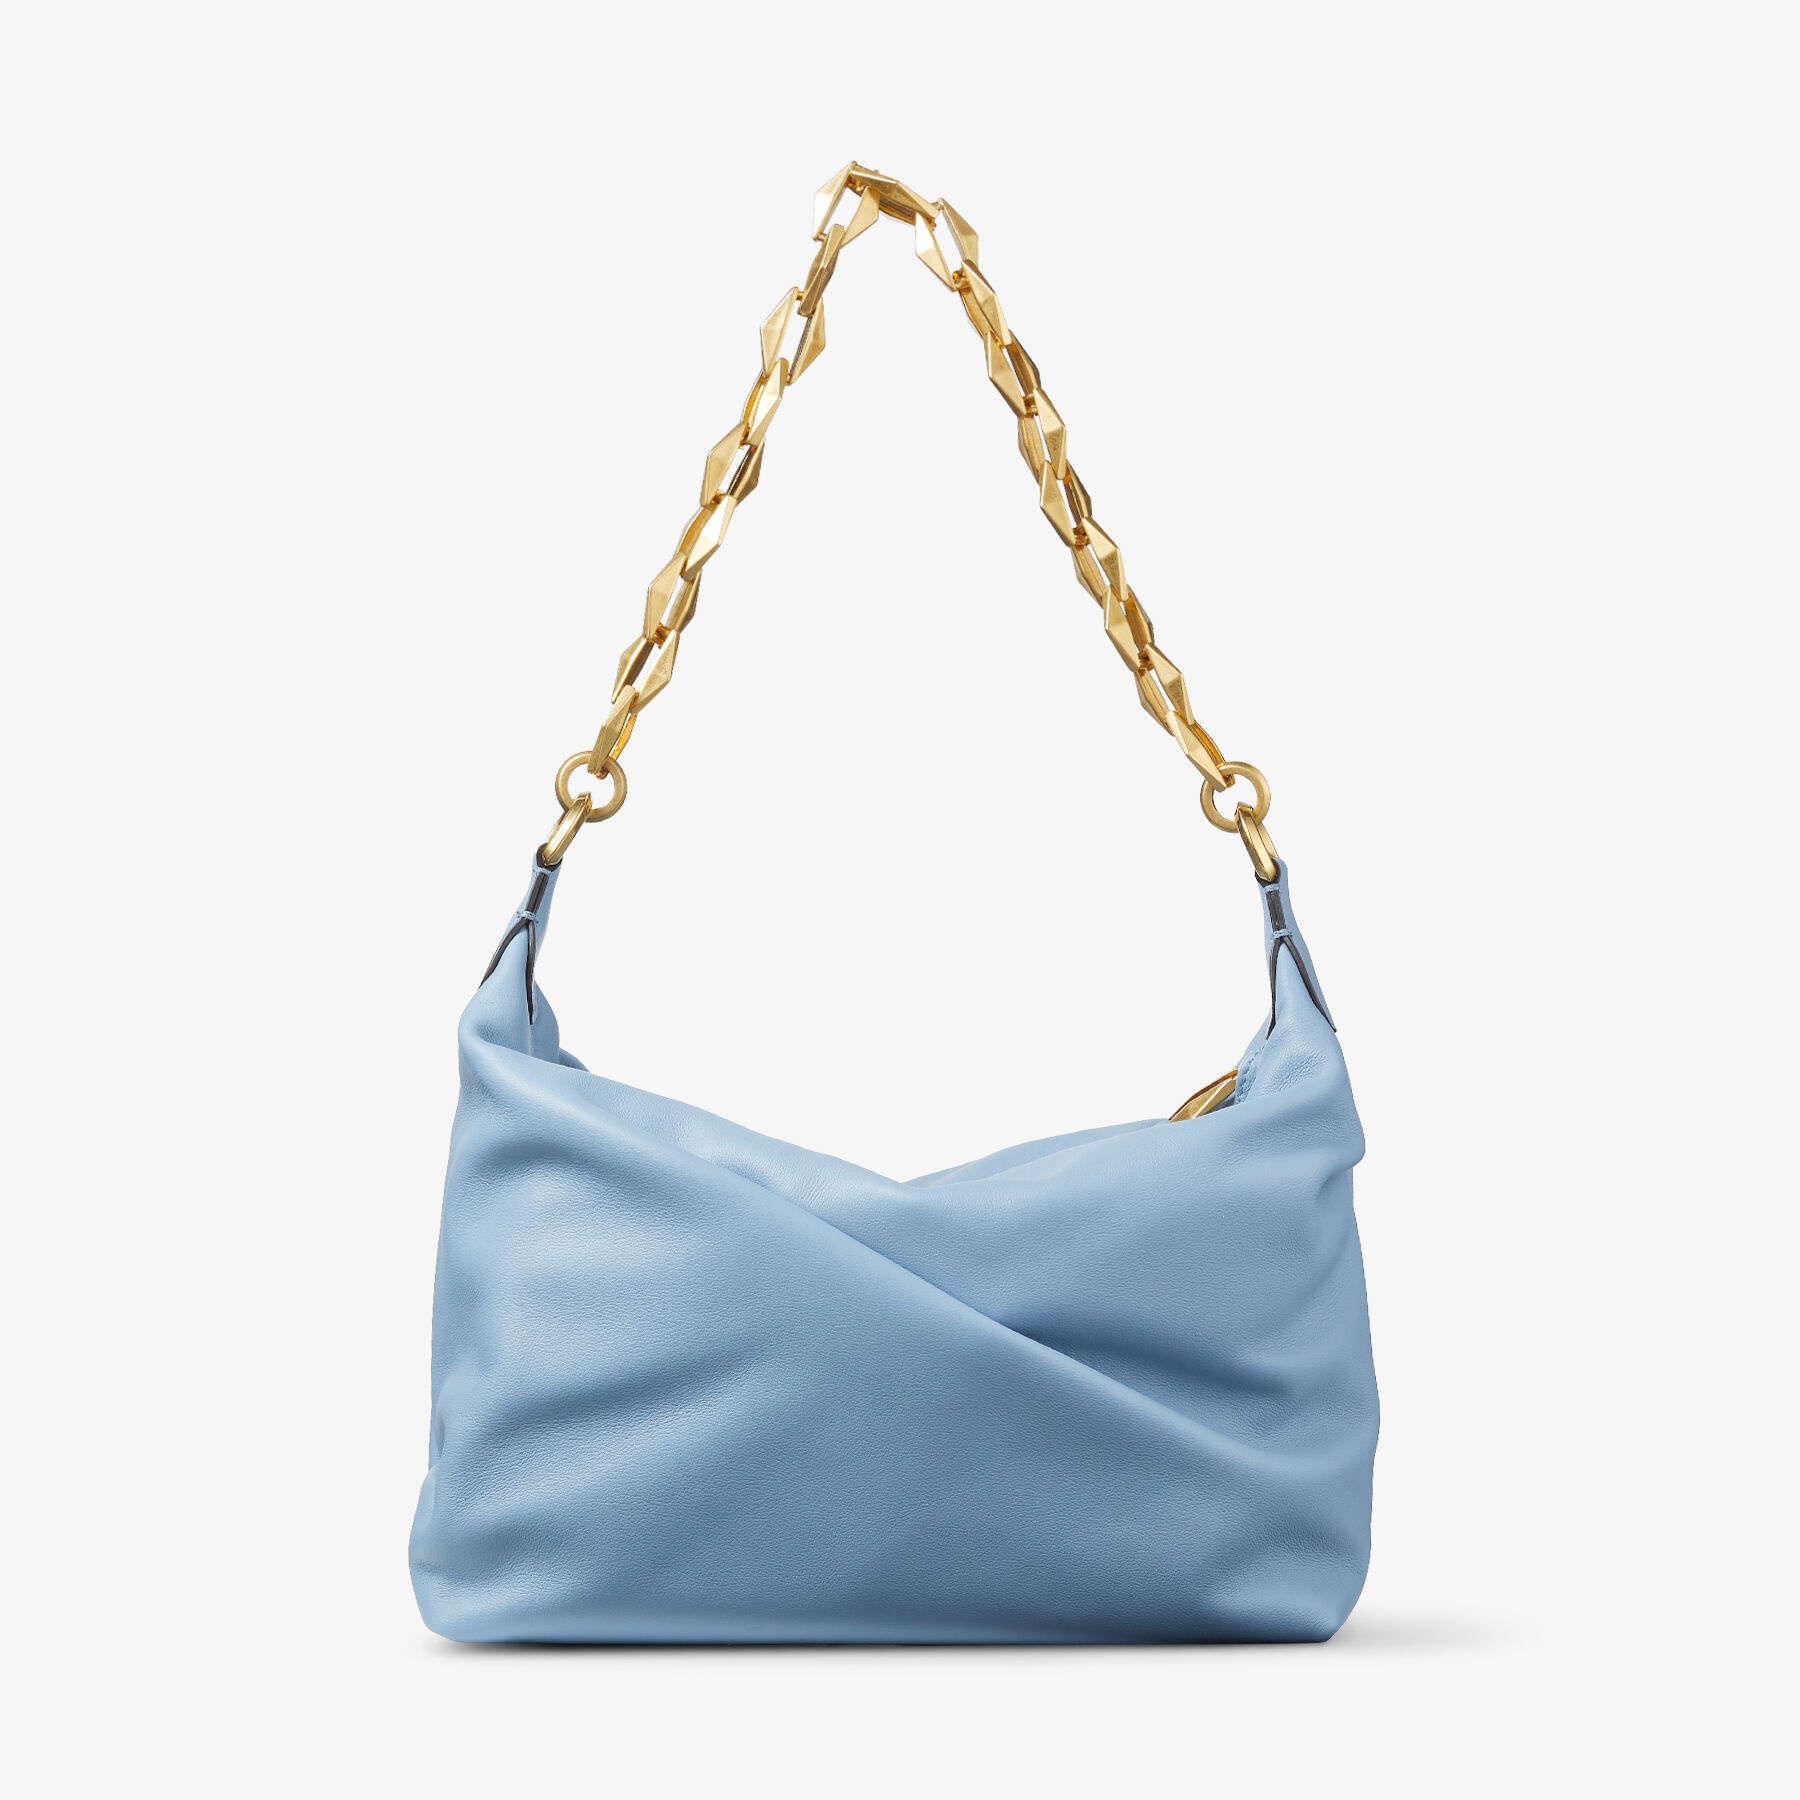 Diamond Soft Hobo S
Smoky Blue Soft Calf Leather Hobo Bag with Chain Strap - 10